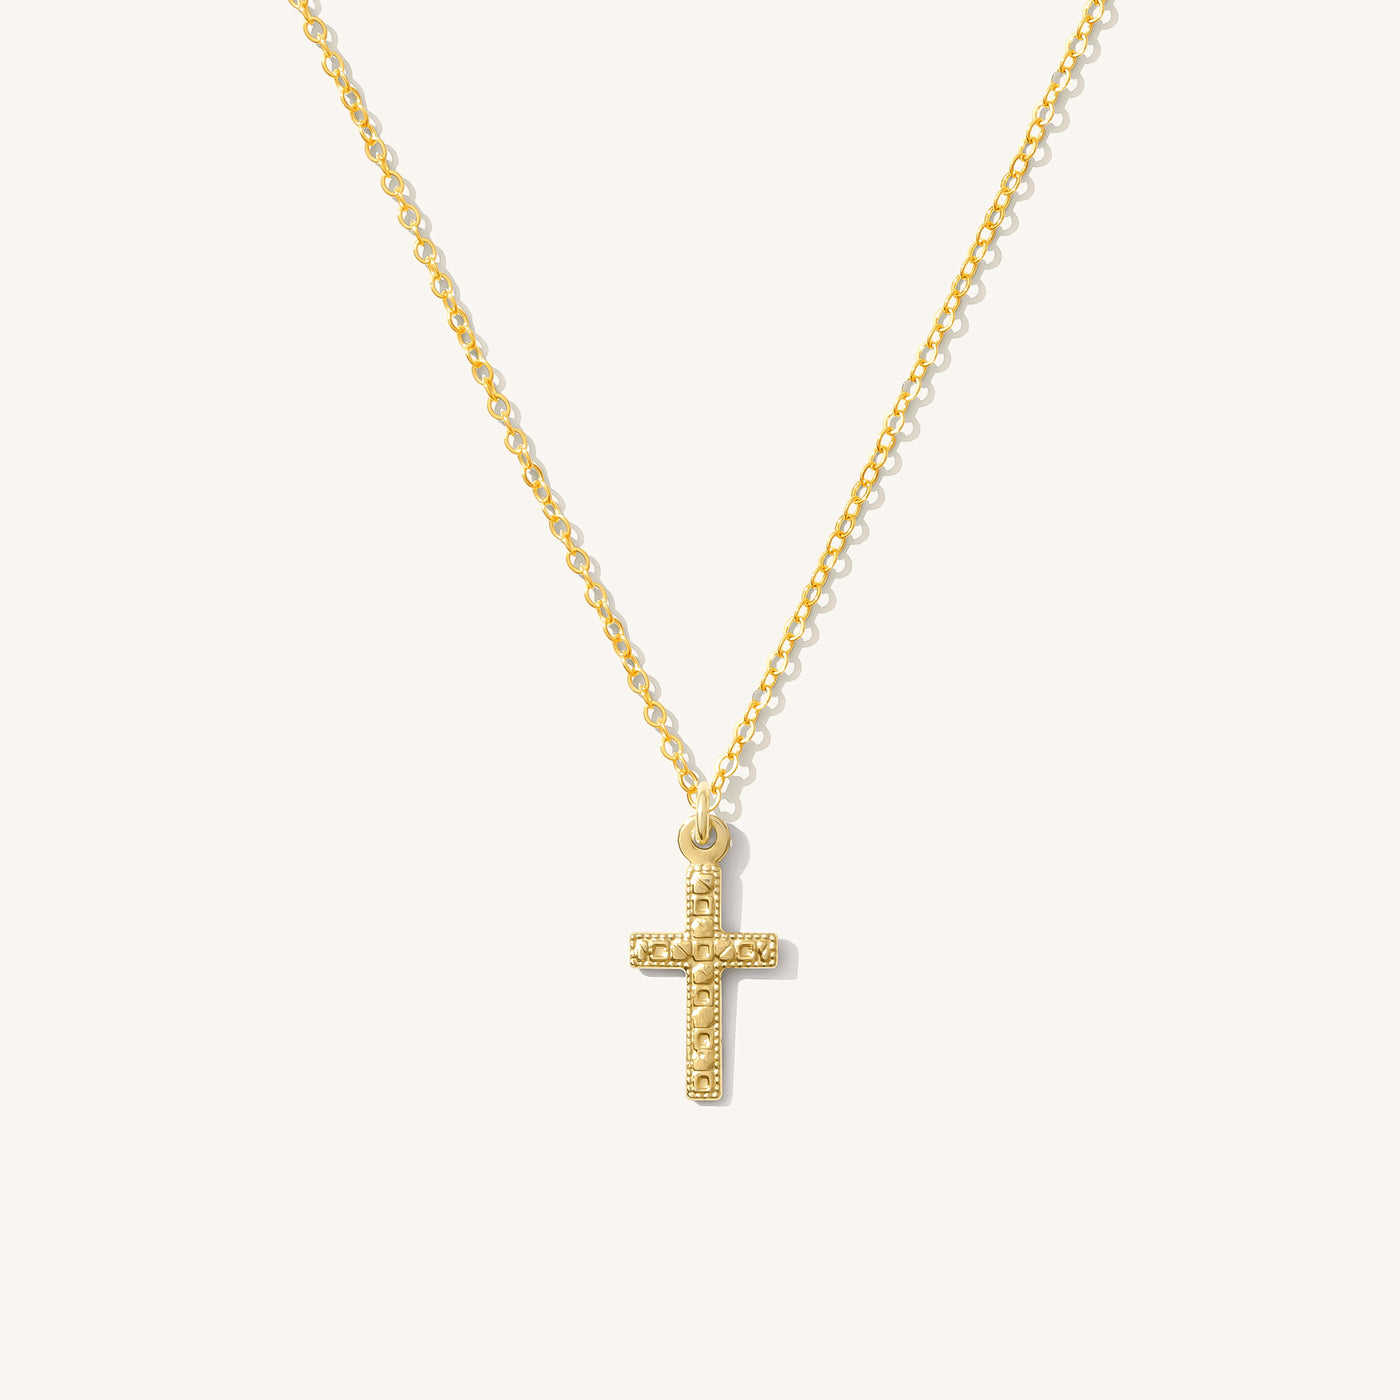 Tiny Cross Necklace | Simple & Dainty Jewelry